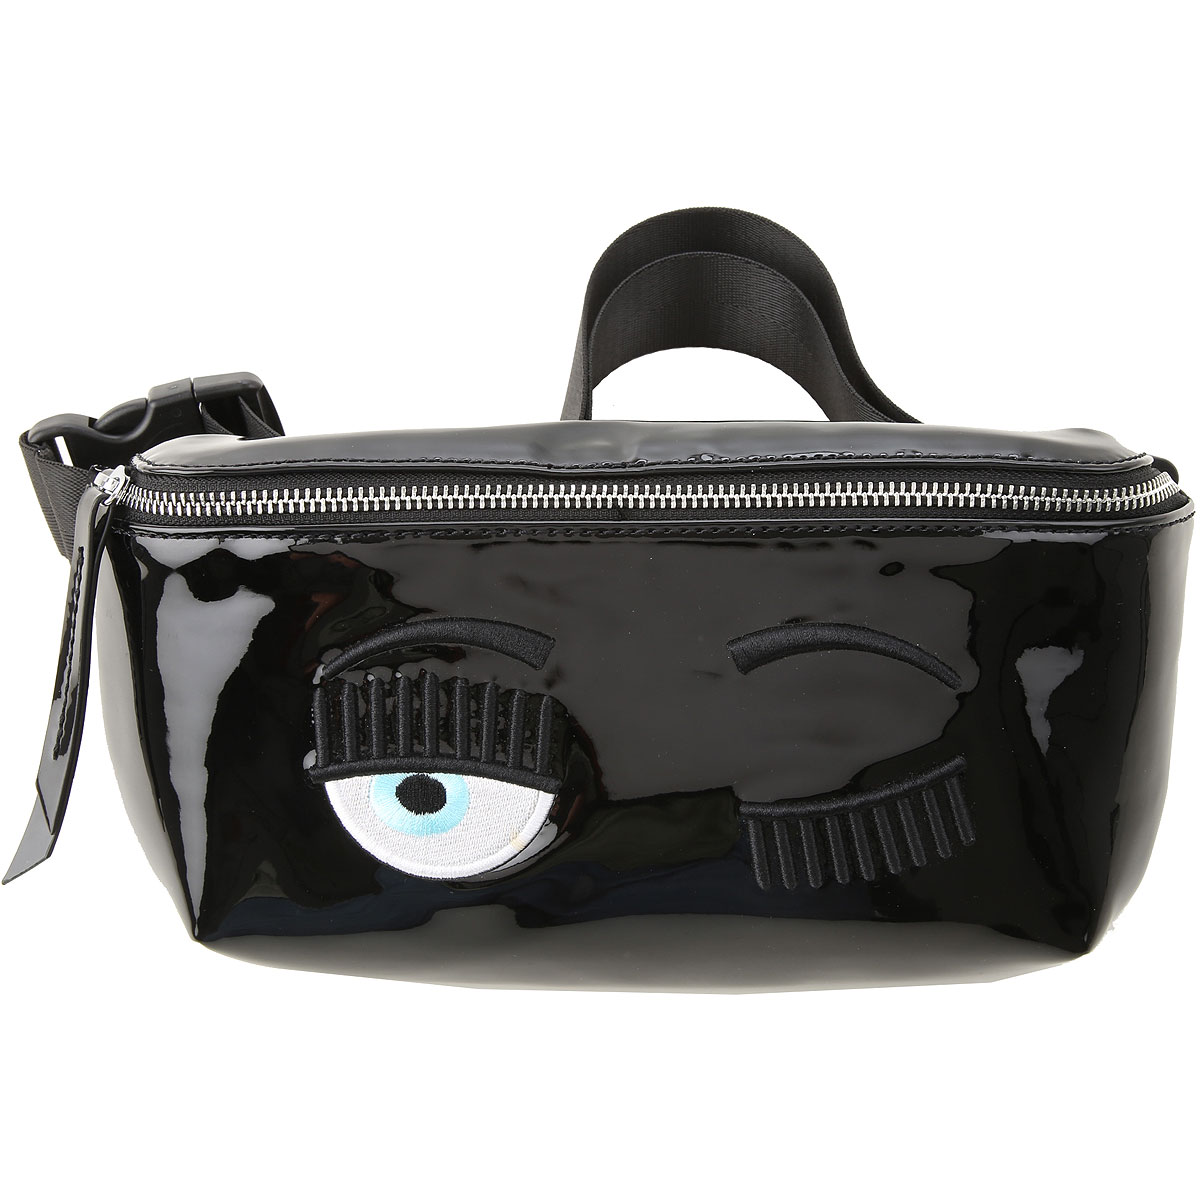 Handbags Chiara Ferragni, Style code: cfbb009-black-B225